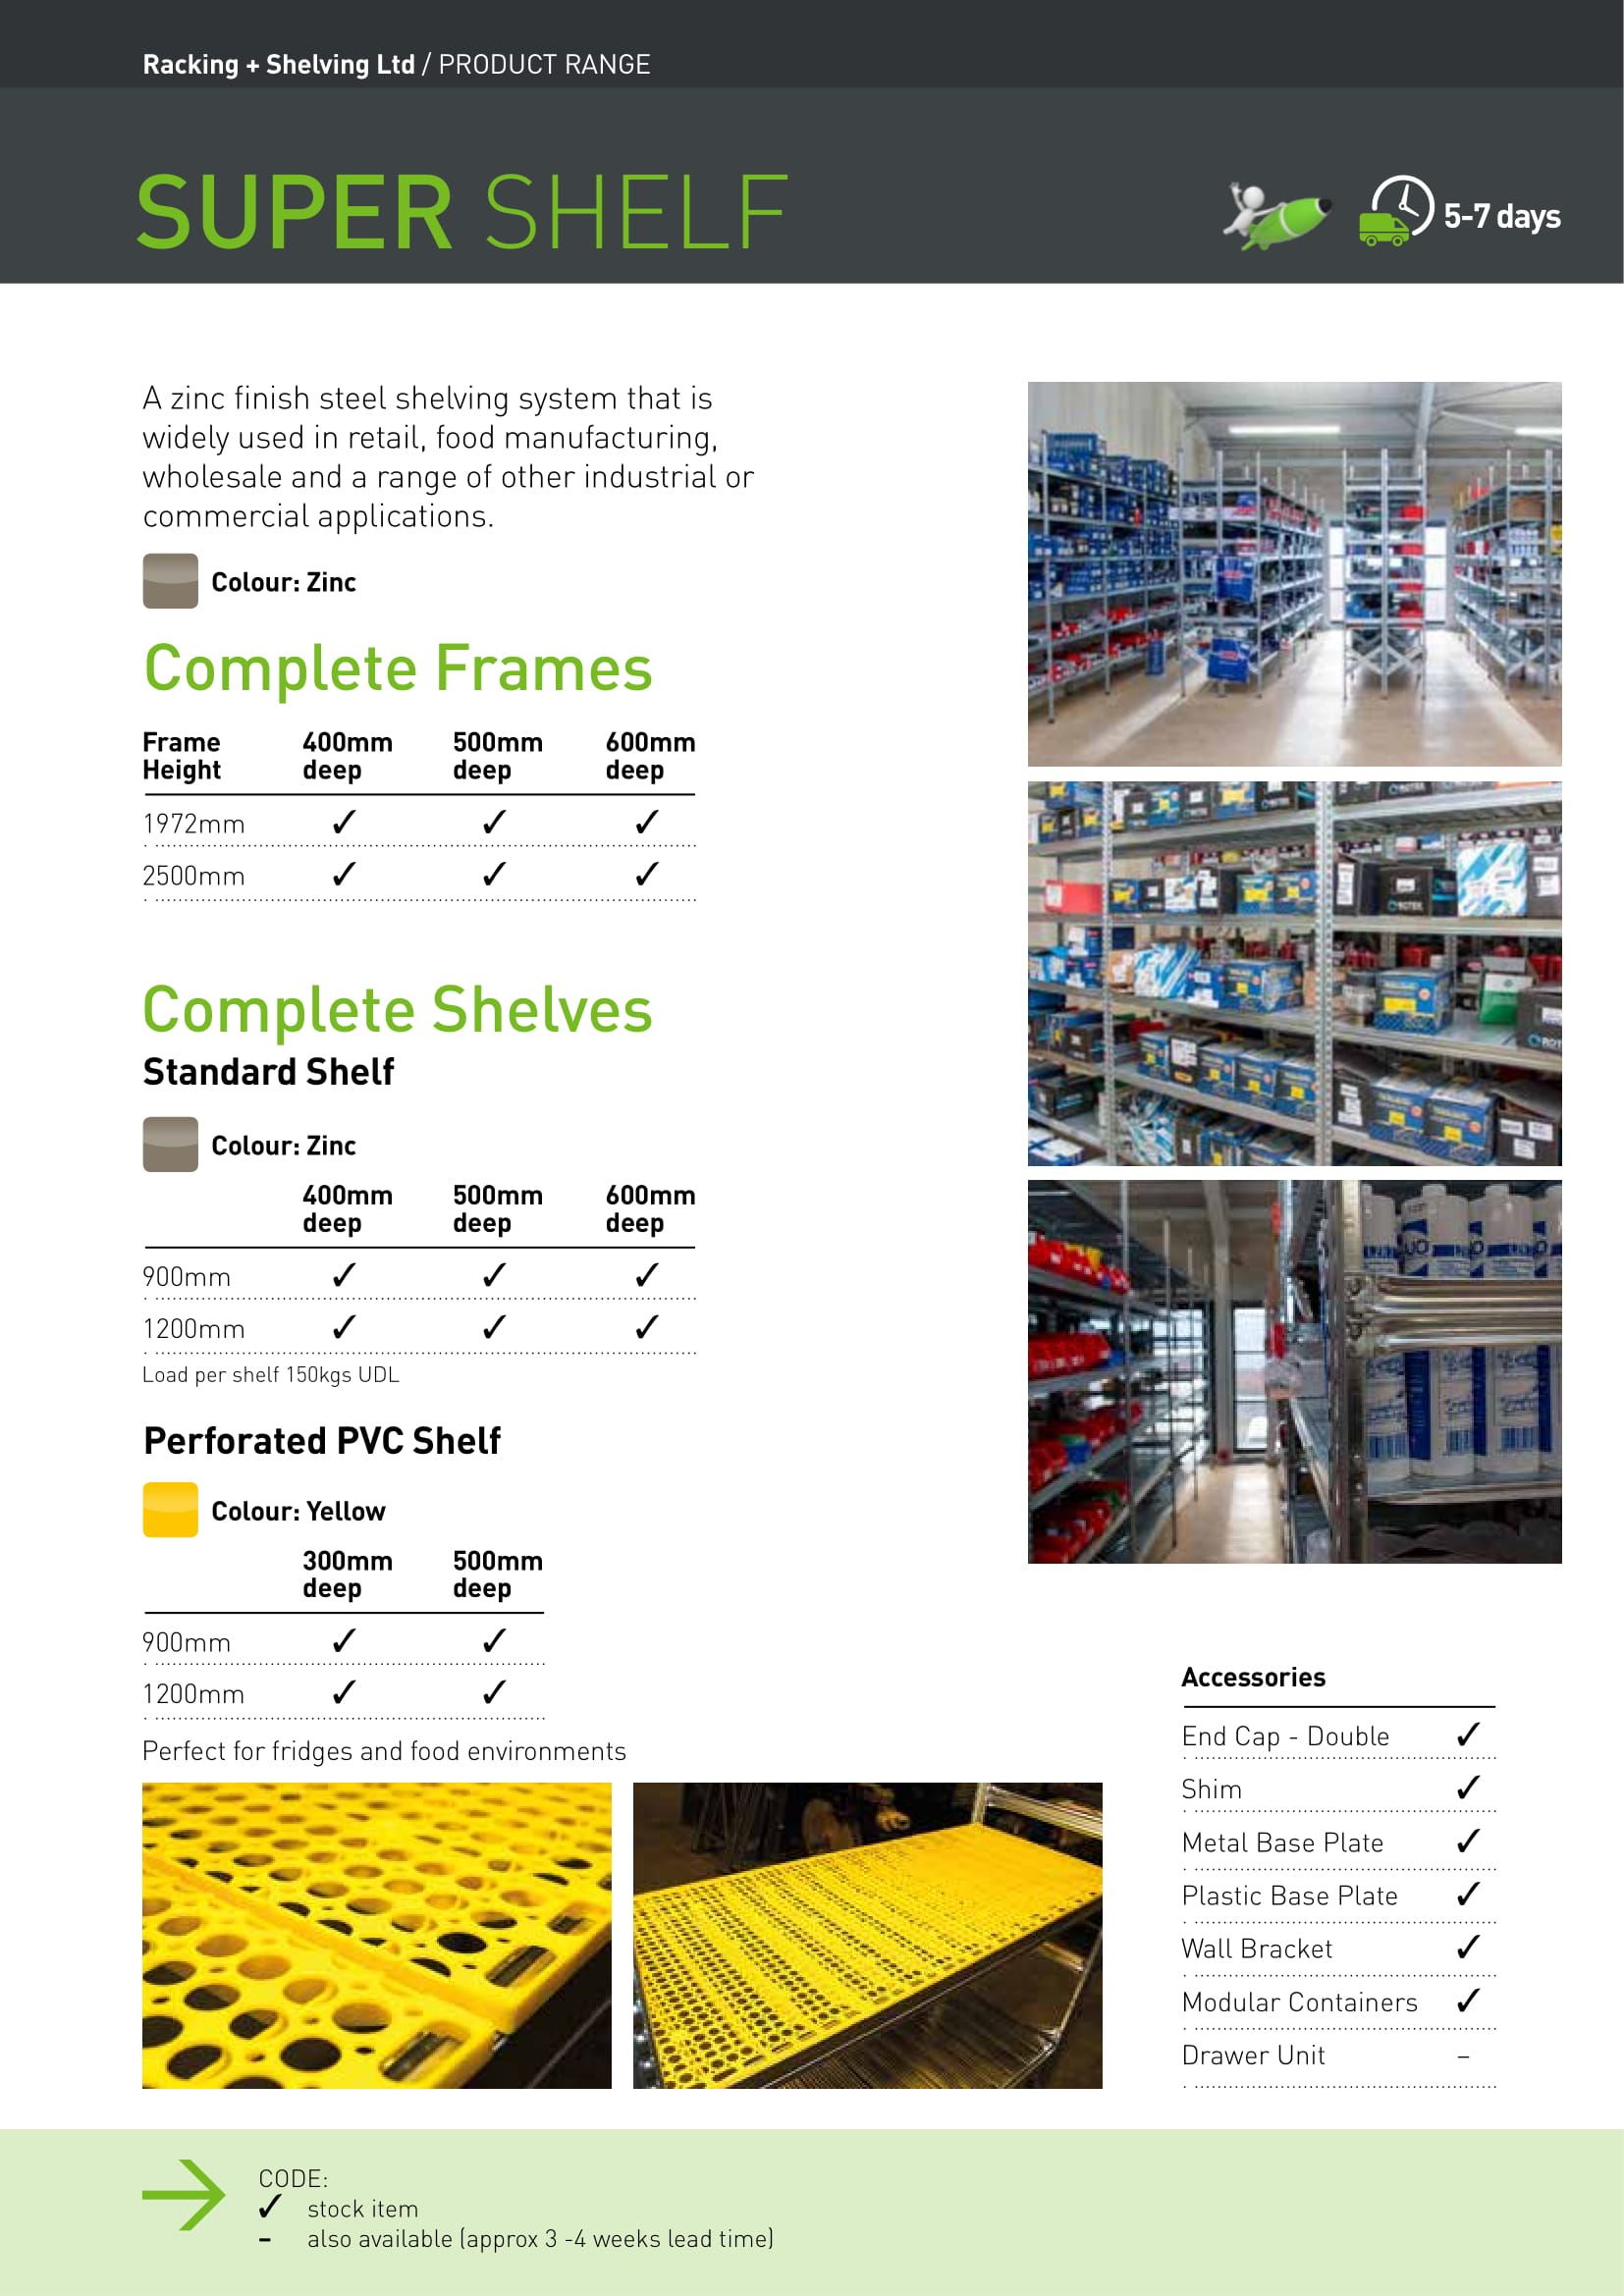 Super shelf brochure page showcasing complete frames, shelves and pvc shelves